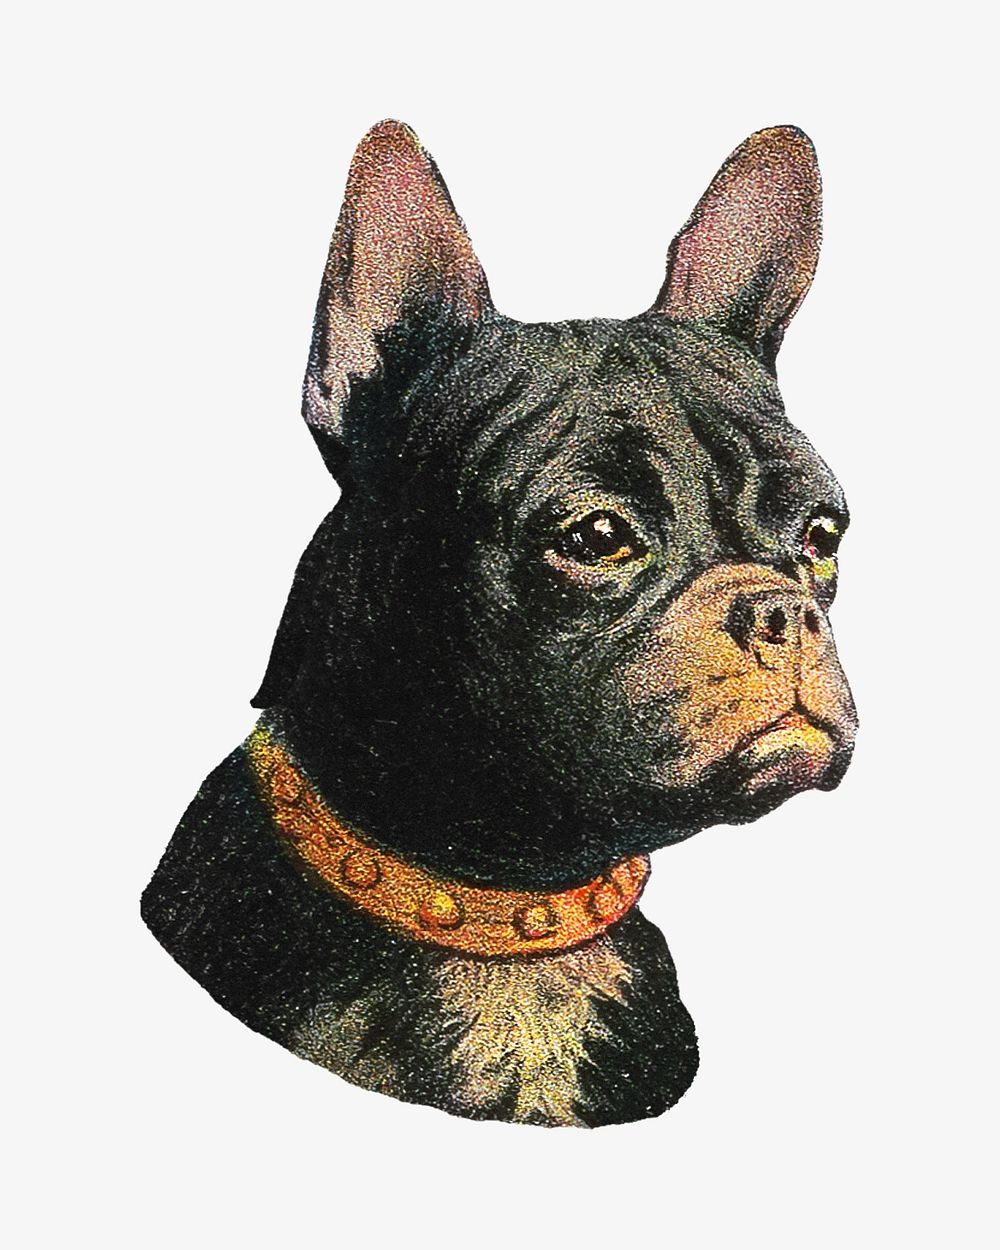 French bulldog dog, vintage animal illustration.    Remixed by rawpixel.